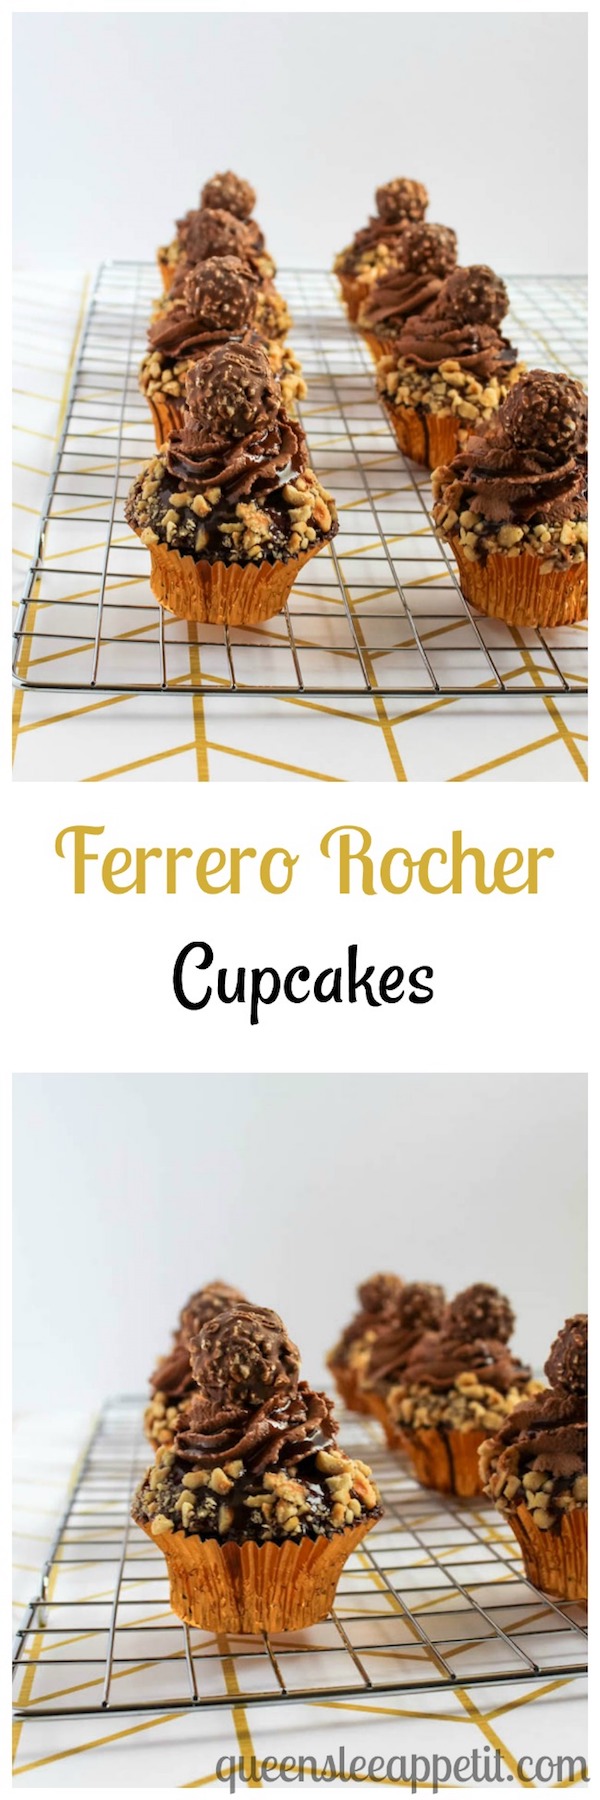 Ferrero Rocher Cupcakes dipped in Nutella Ganache, the perfect cupcake for Nutella lovers!